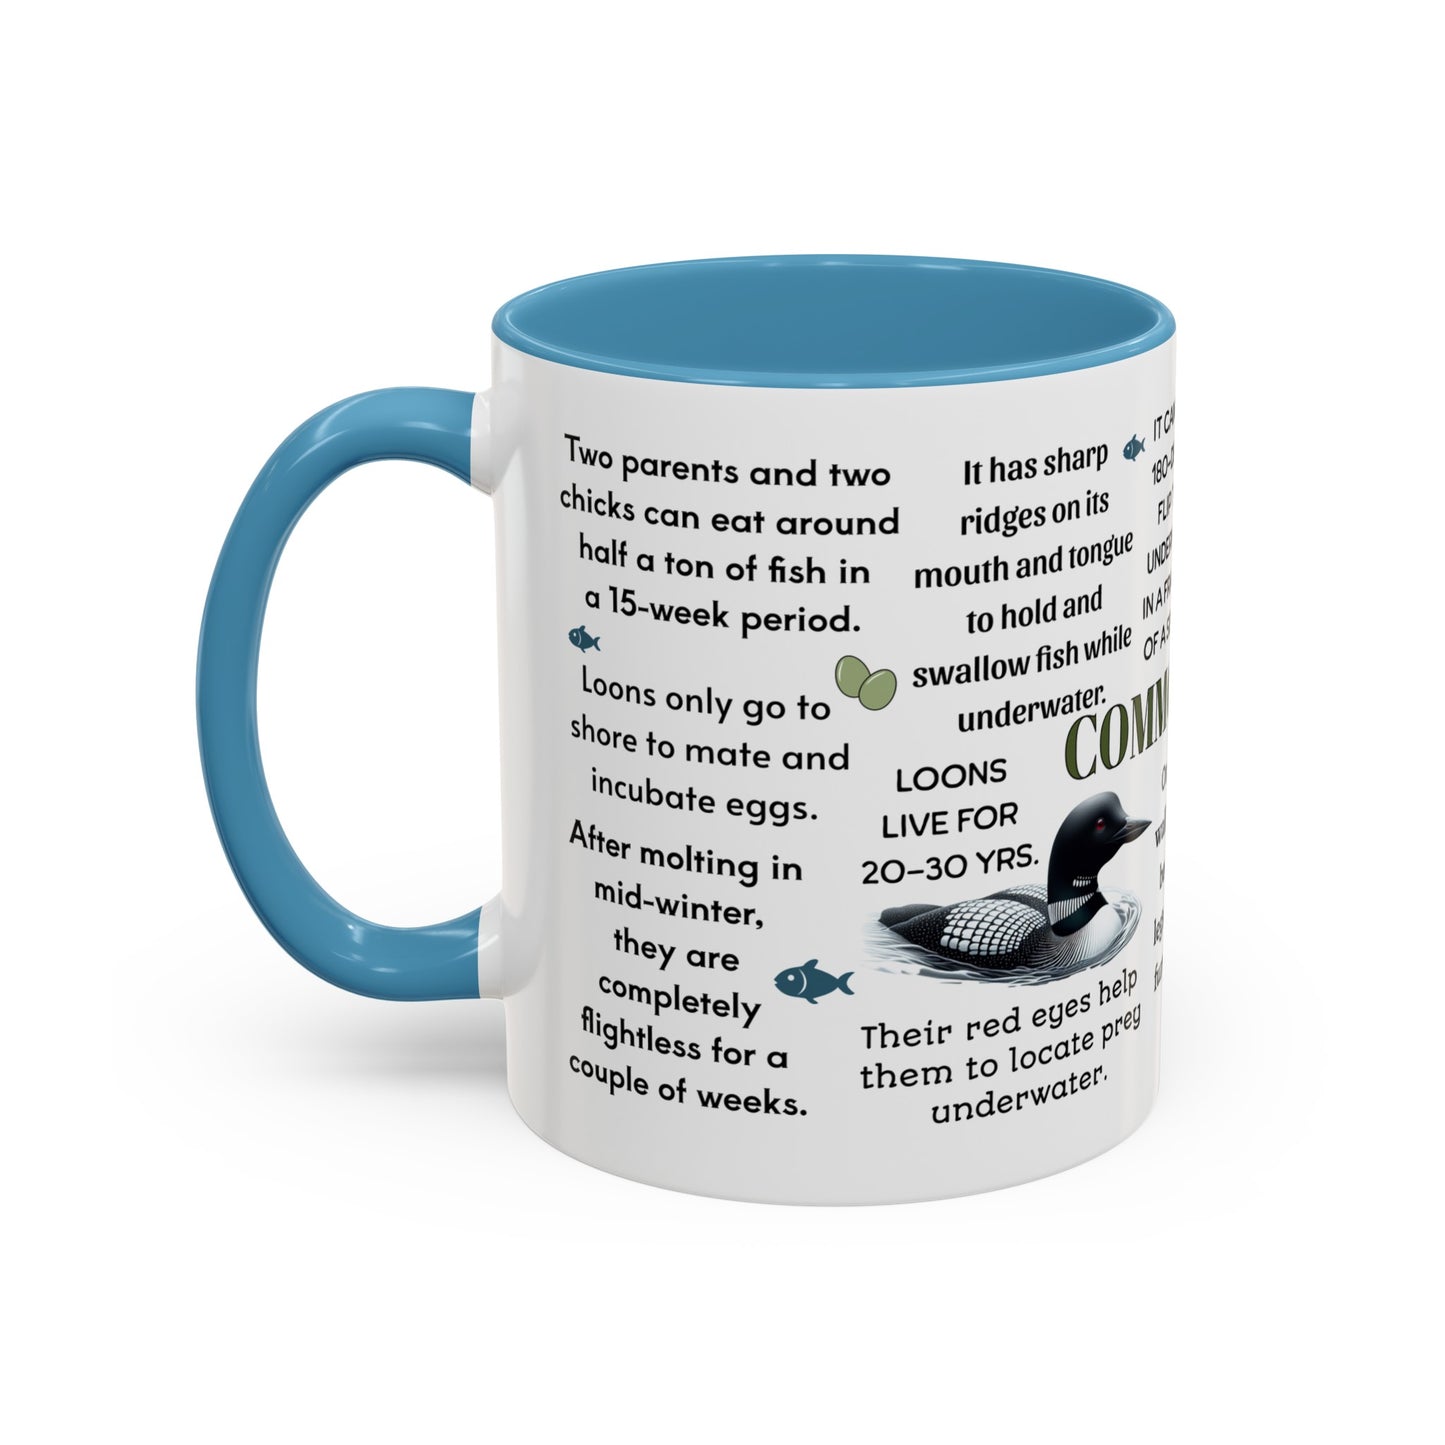 Common Loon Coffee Mug, 11 oz or 15oz